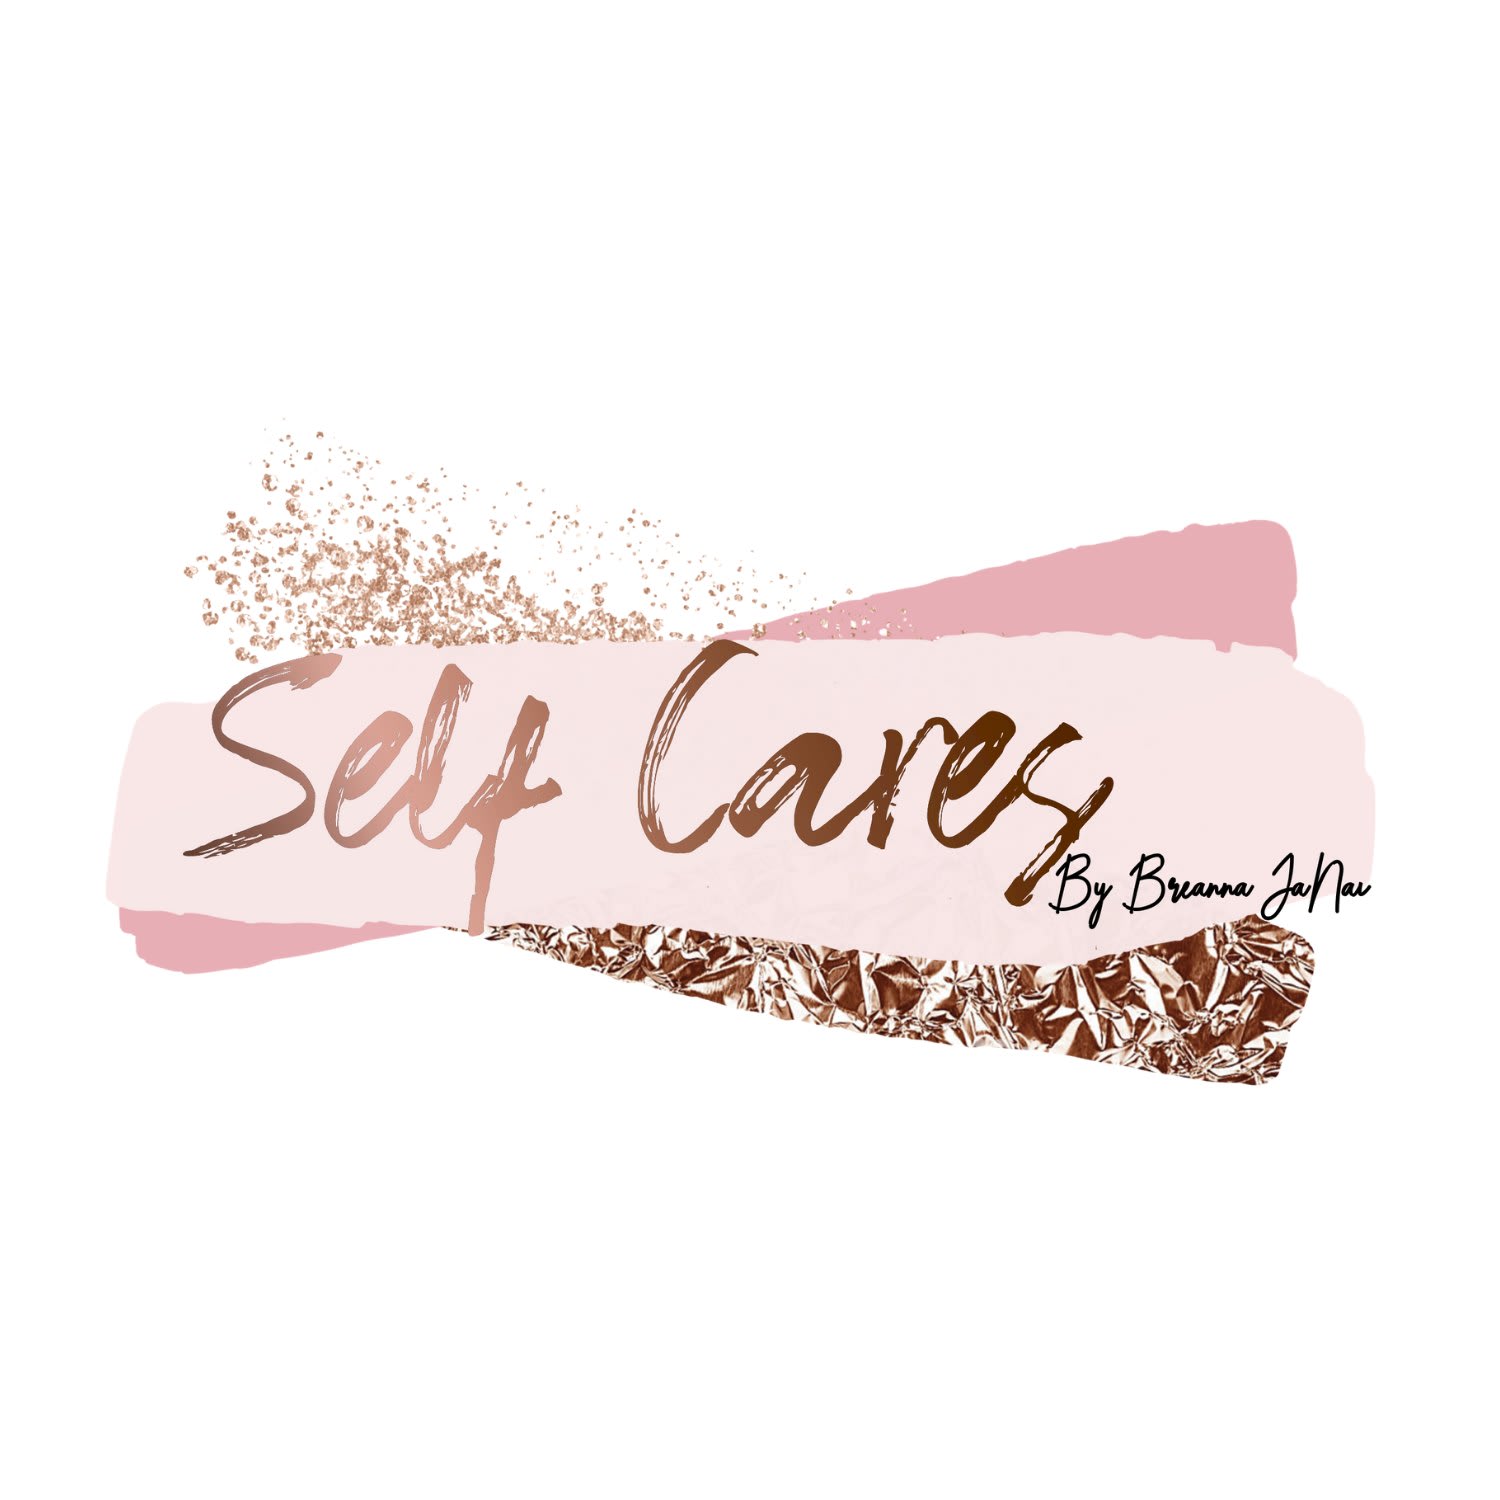 Self Cares